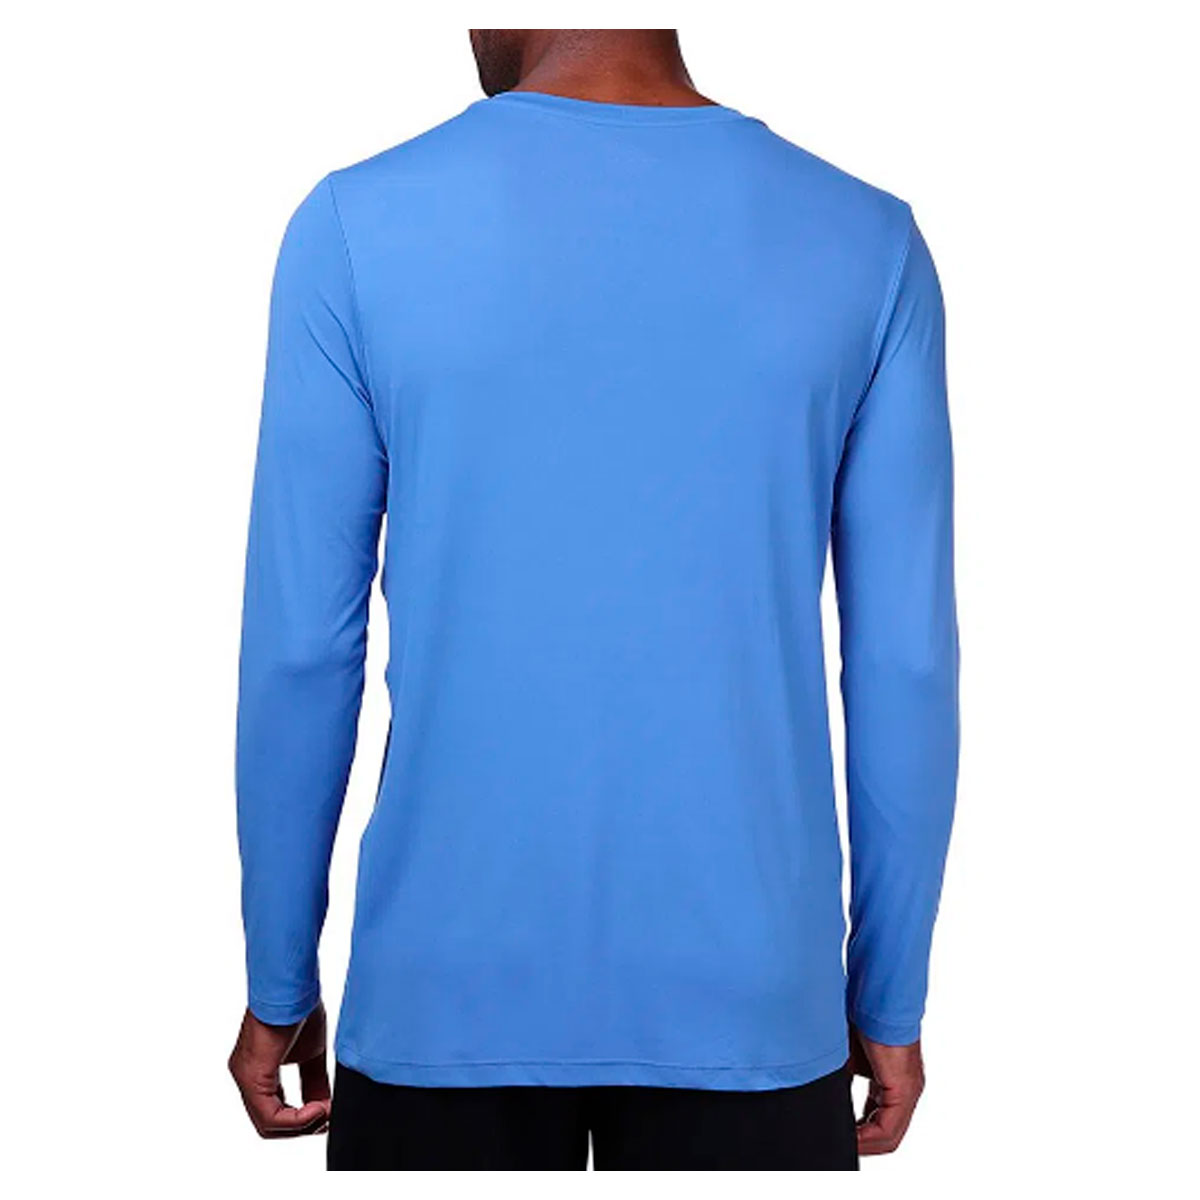 Camiseta Masculina Columbia Neblina Manga Longa Azul Claro